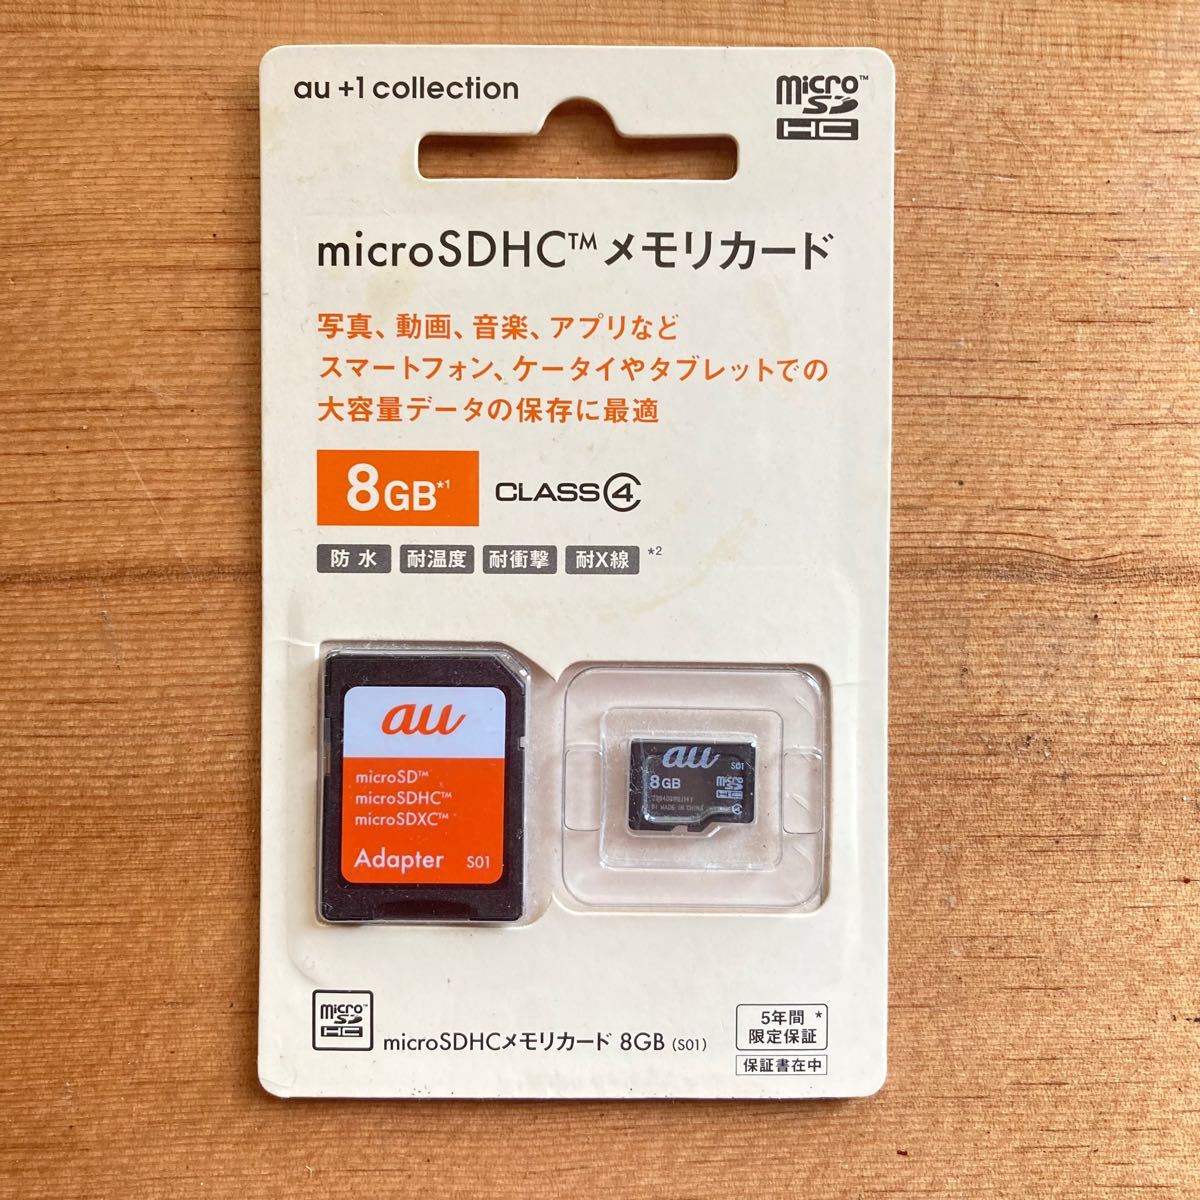 au +1 collection microSDHCメモリカード 8GB (CLASS4) & 変換アダプターセット